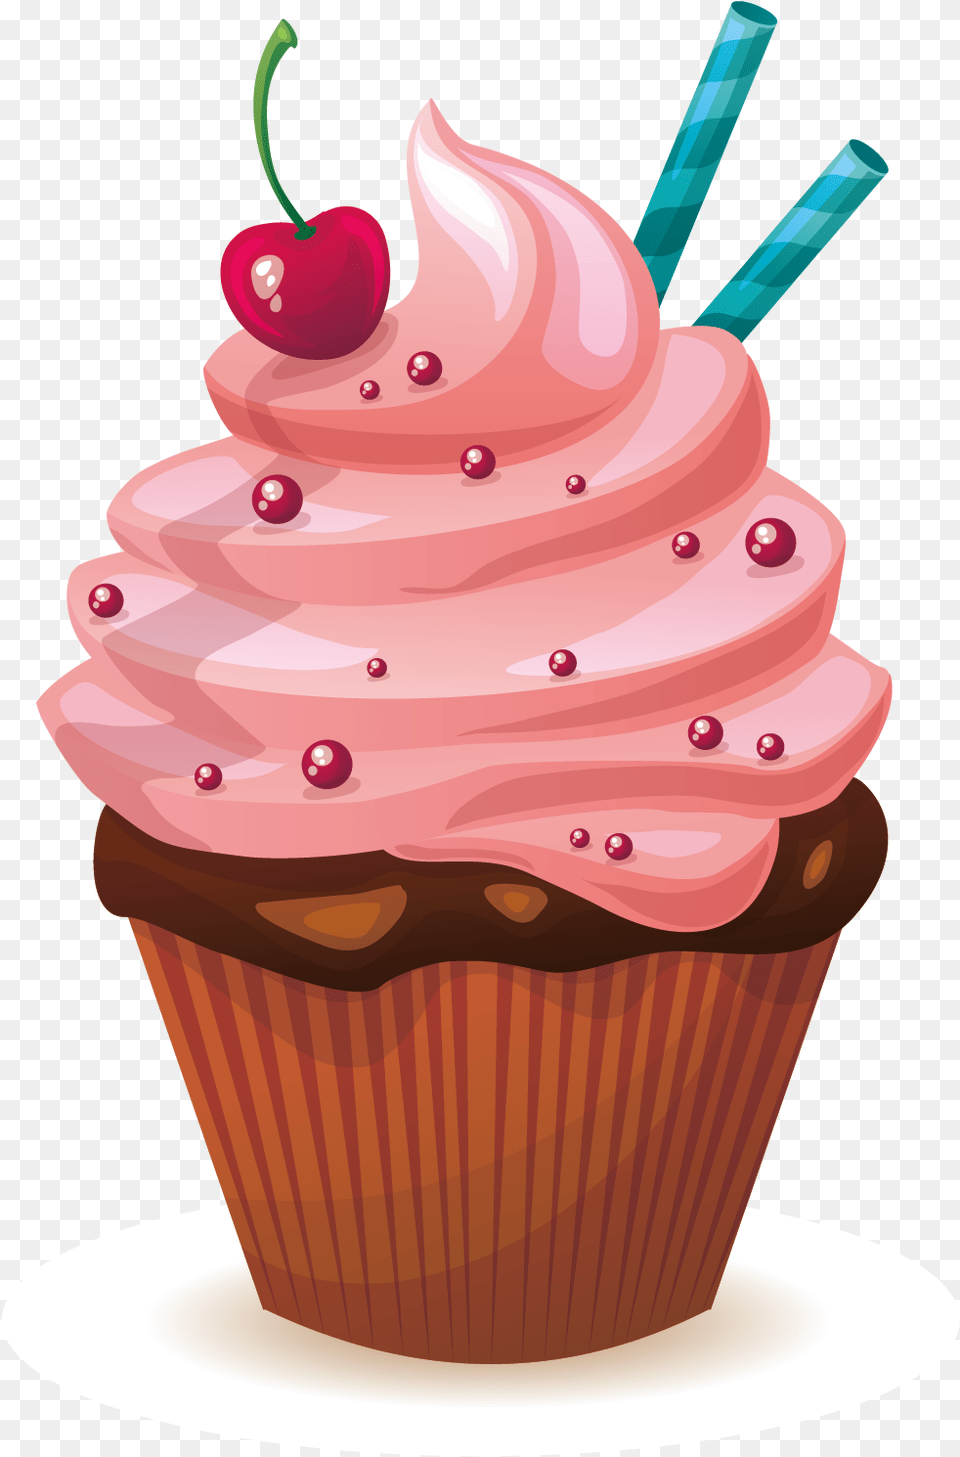 Cupcake Muffin Icing Red Velvet Cake Cupcake Vector, Cream, Dessert, Food, Birthday Cake Free Transparent Png